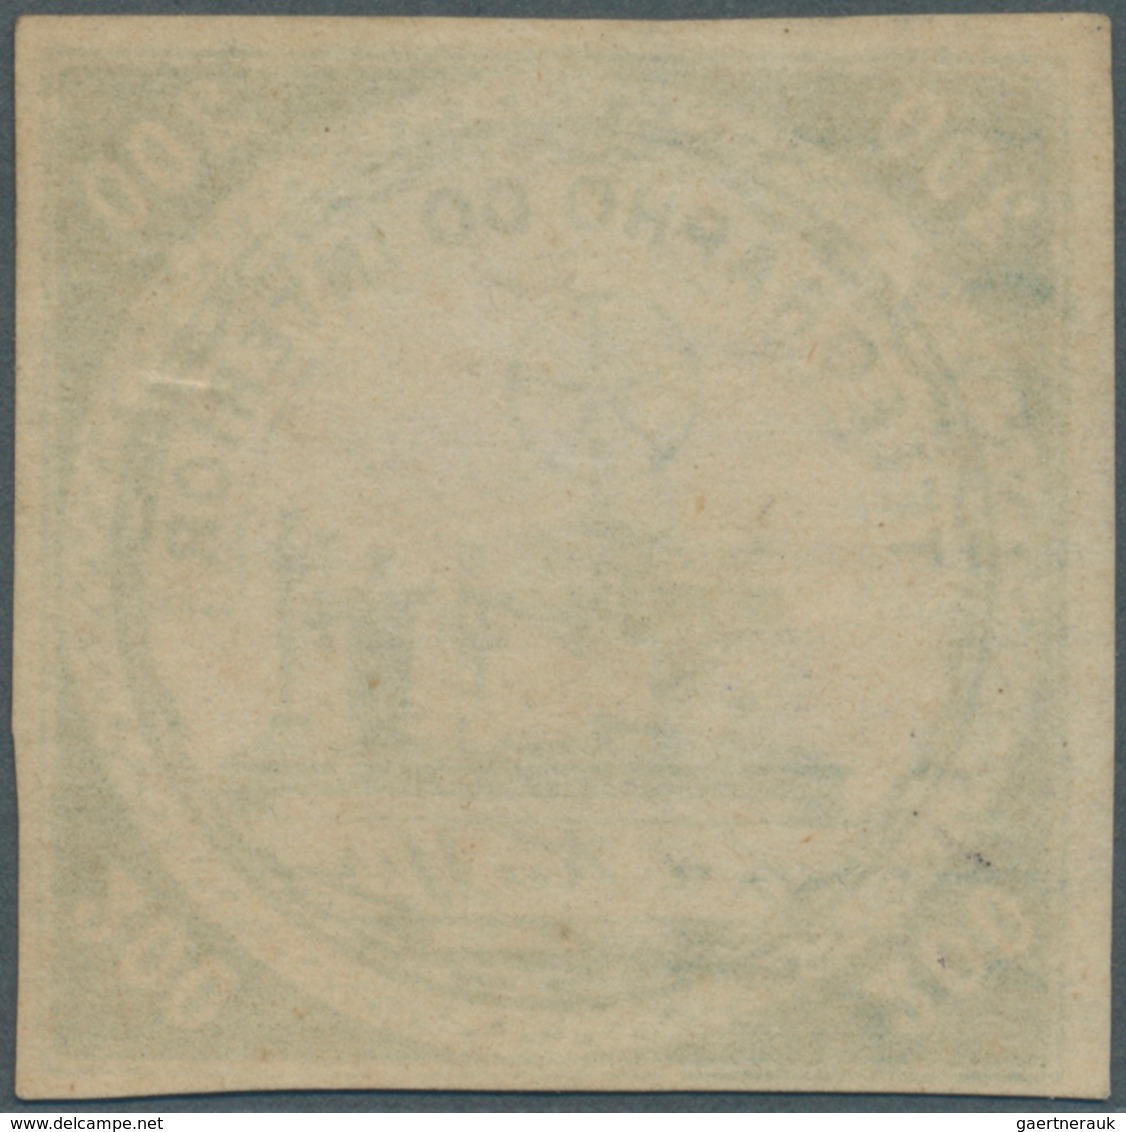 00586 Brasilien - Telegrafenmarken: 1873, 200r. Yellow-green, Wm "Lacroix Freres", Fresh Colour, Full Marg - Telegraafzegels